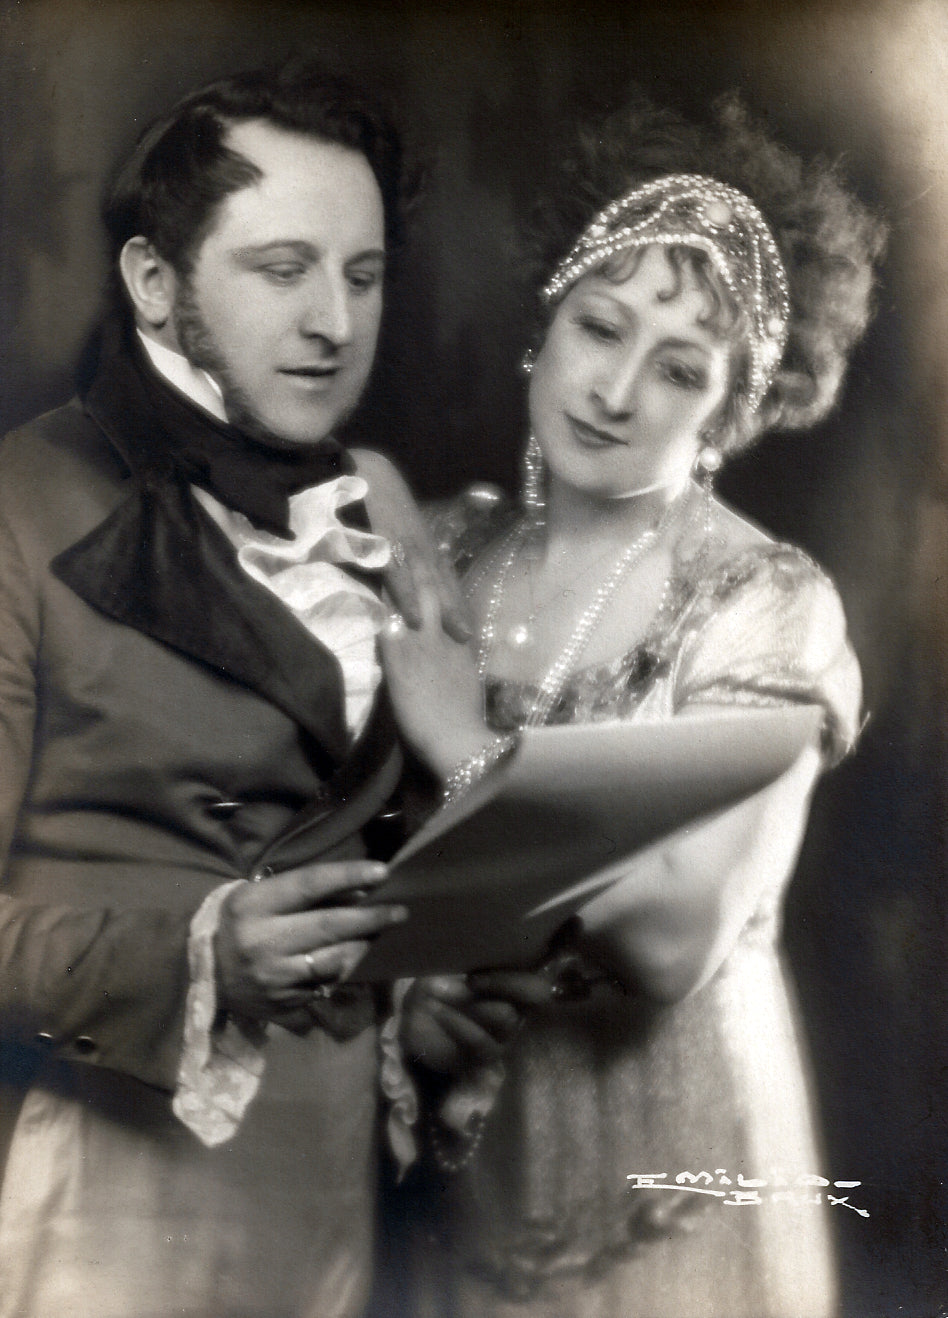 Baritone Alain Malbrecq (aka Alain: 1891-1945) and soprano Lucienne Despy (1893-1945) as Paganini and Princess Bonaparte